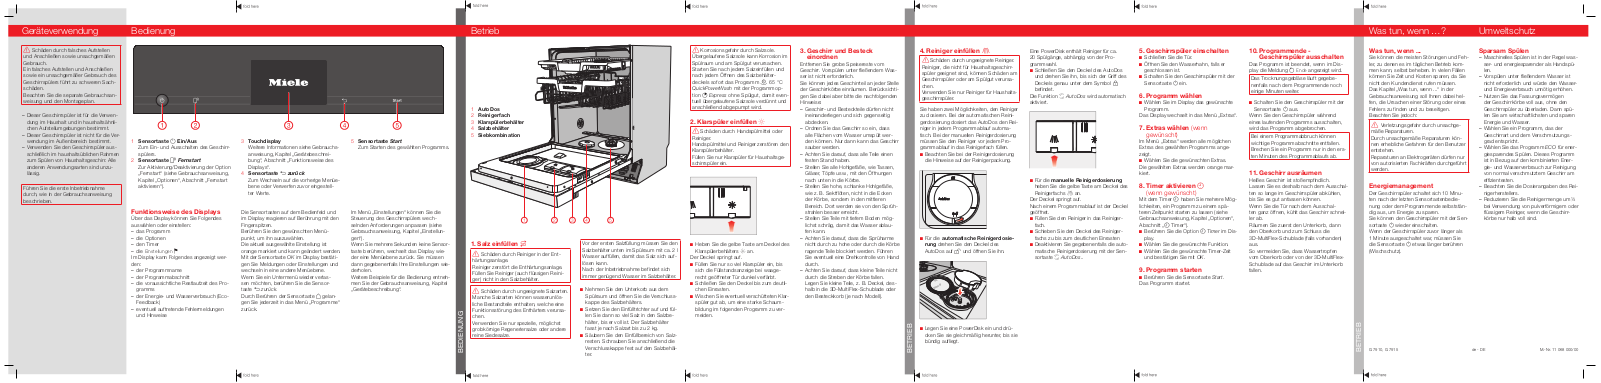 Miele G 7910 SCi AutoDos operation manual